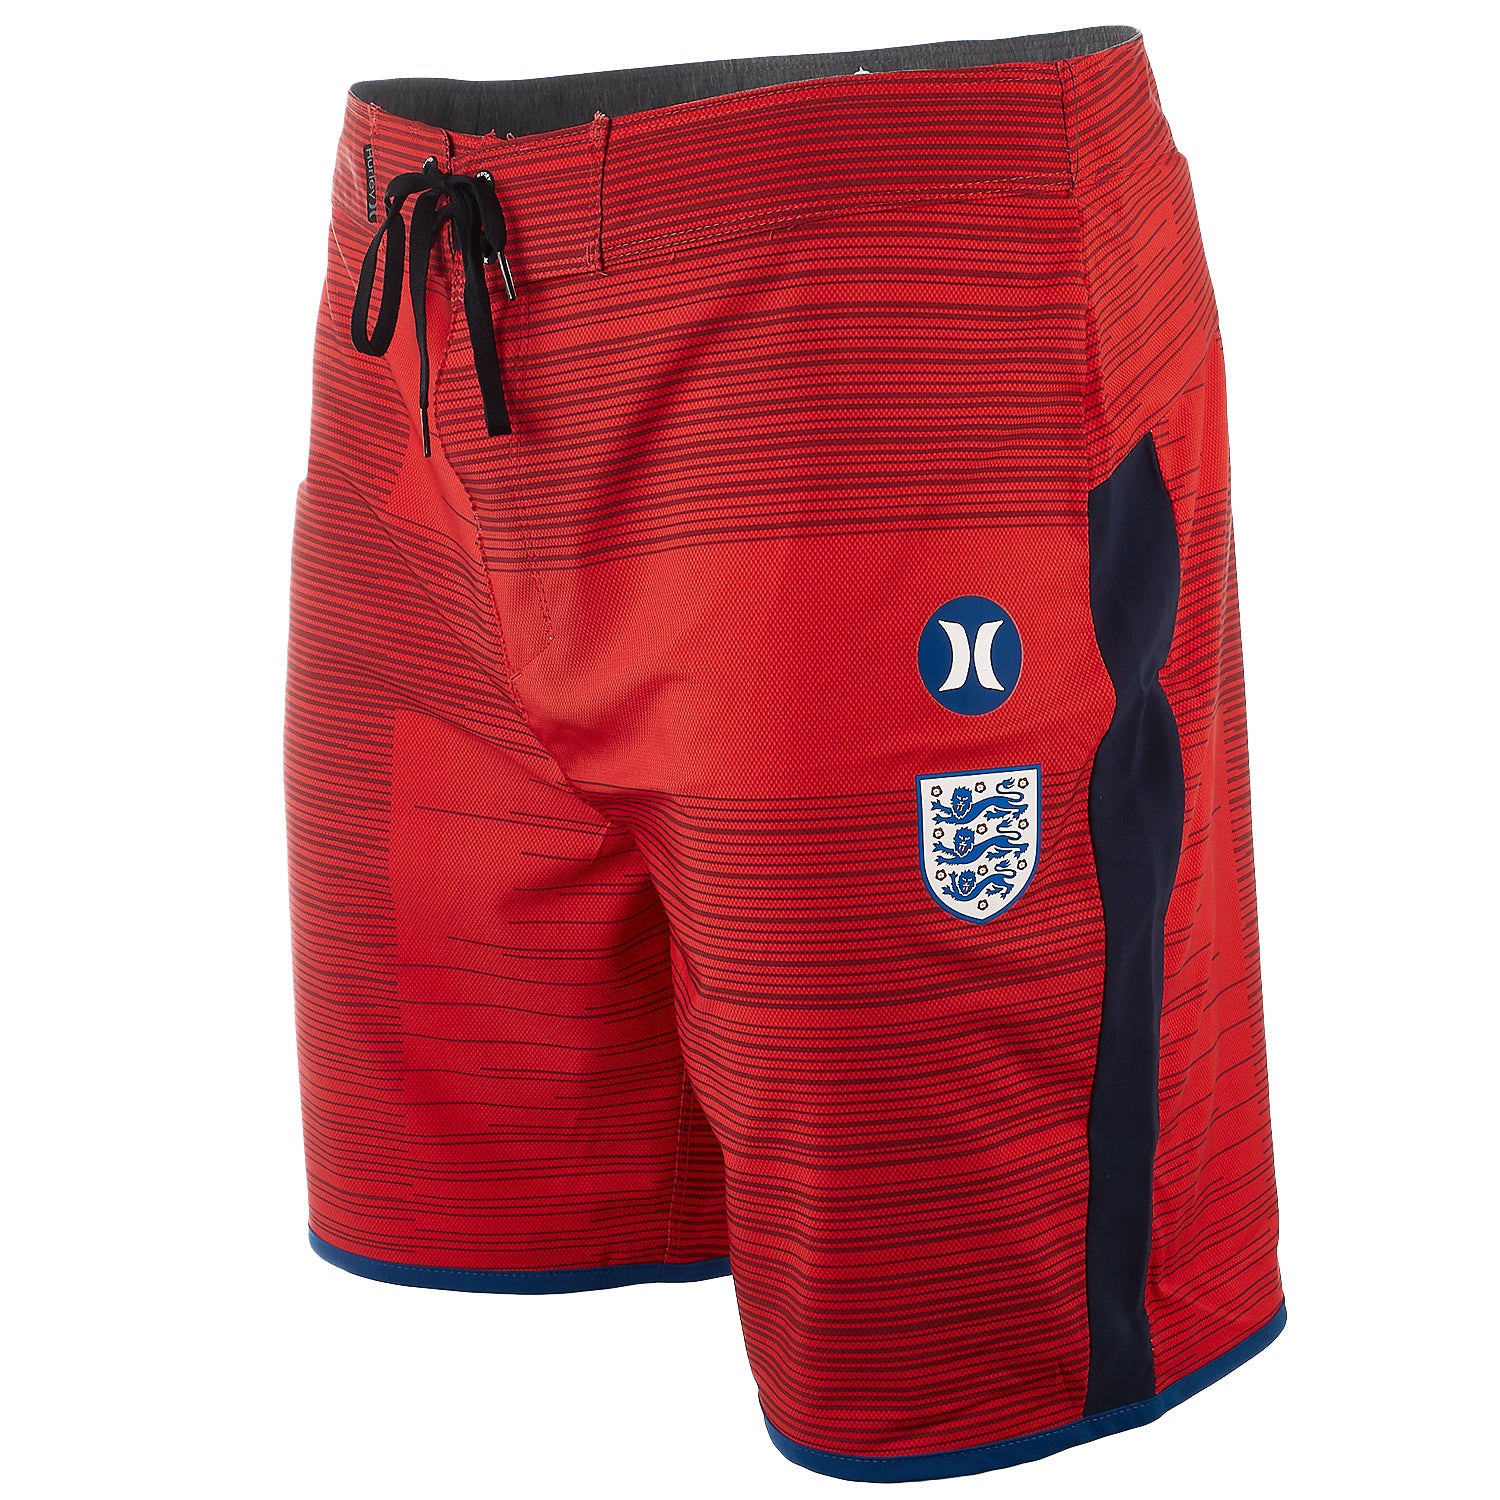 Hurley Phantom England National Team 18 Board Shorts - Men's